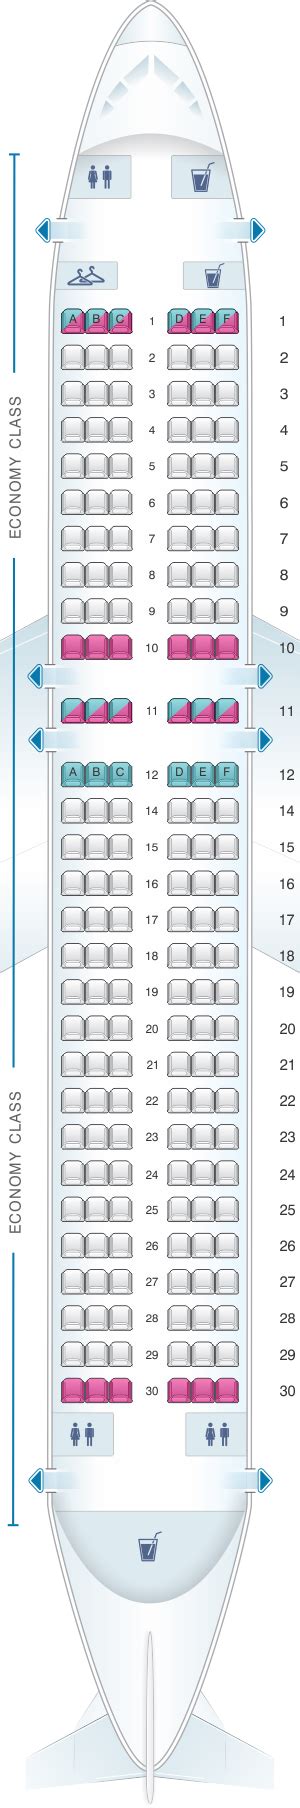 Airbus A320 Air France Seating Chart 123